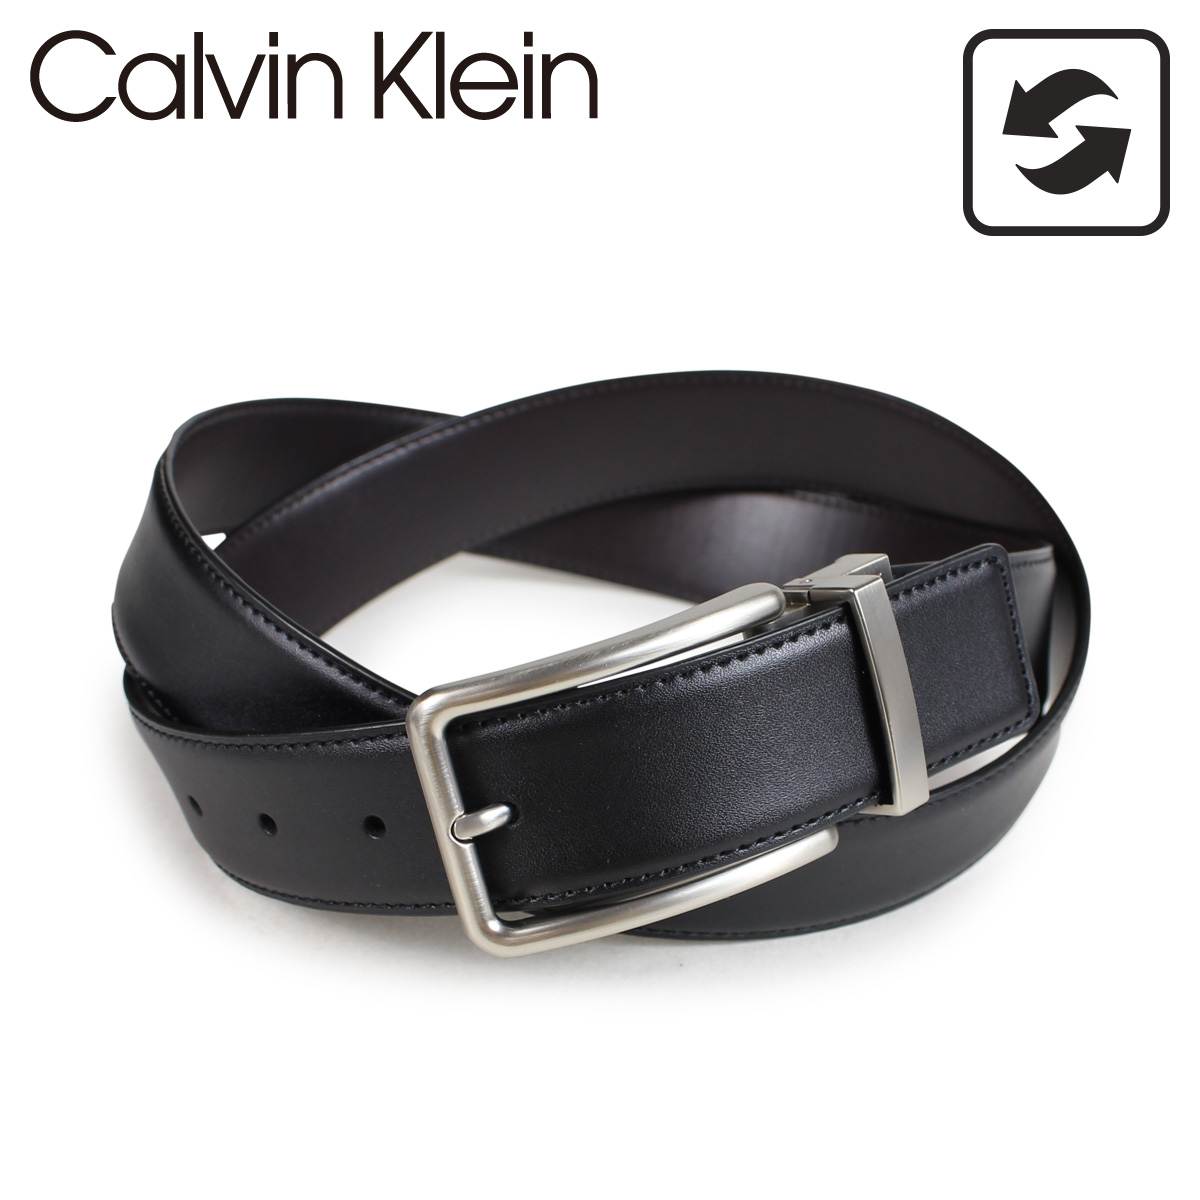 calvin klein belt reversible